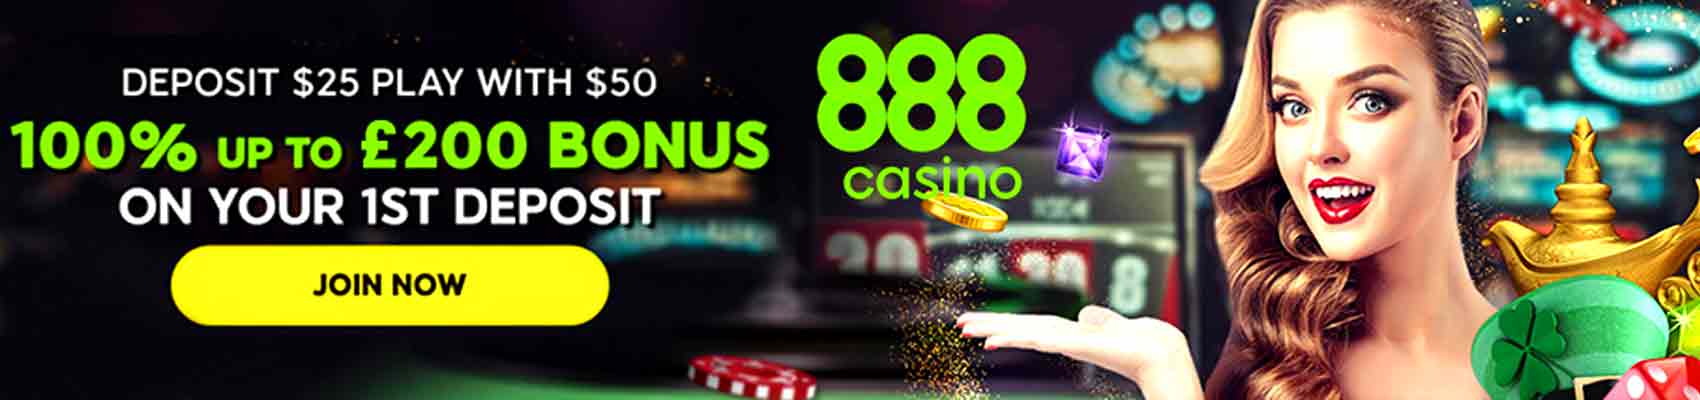 Arab 888 Casino 02